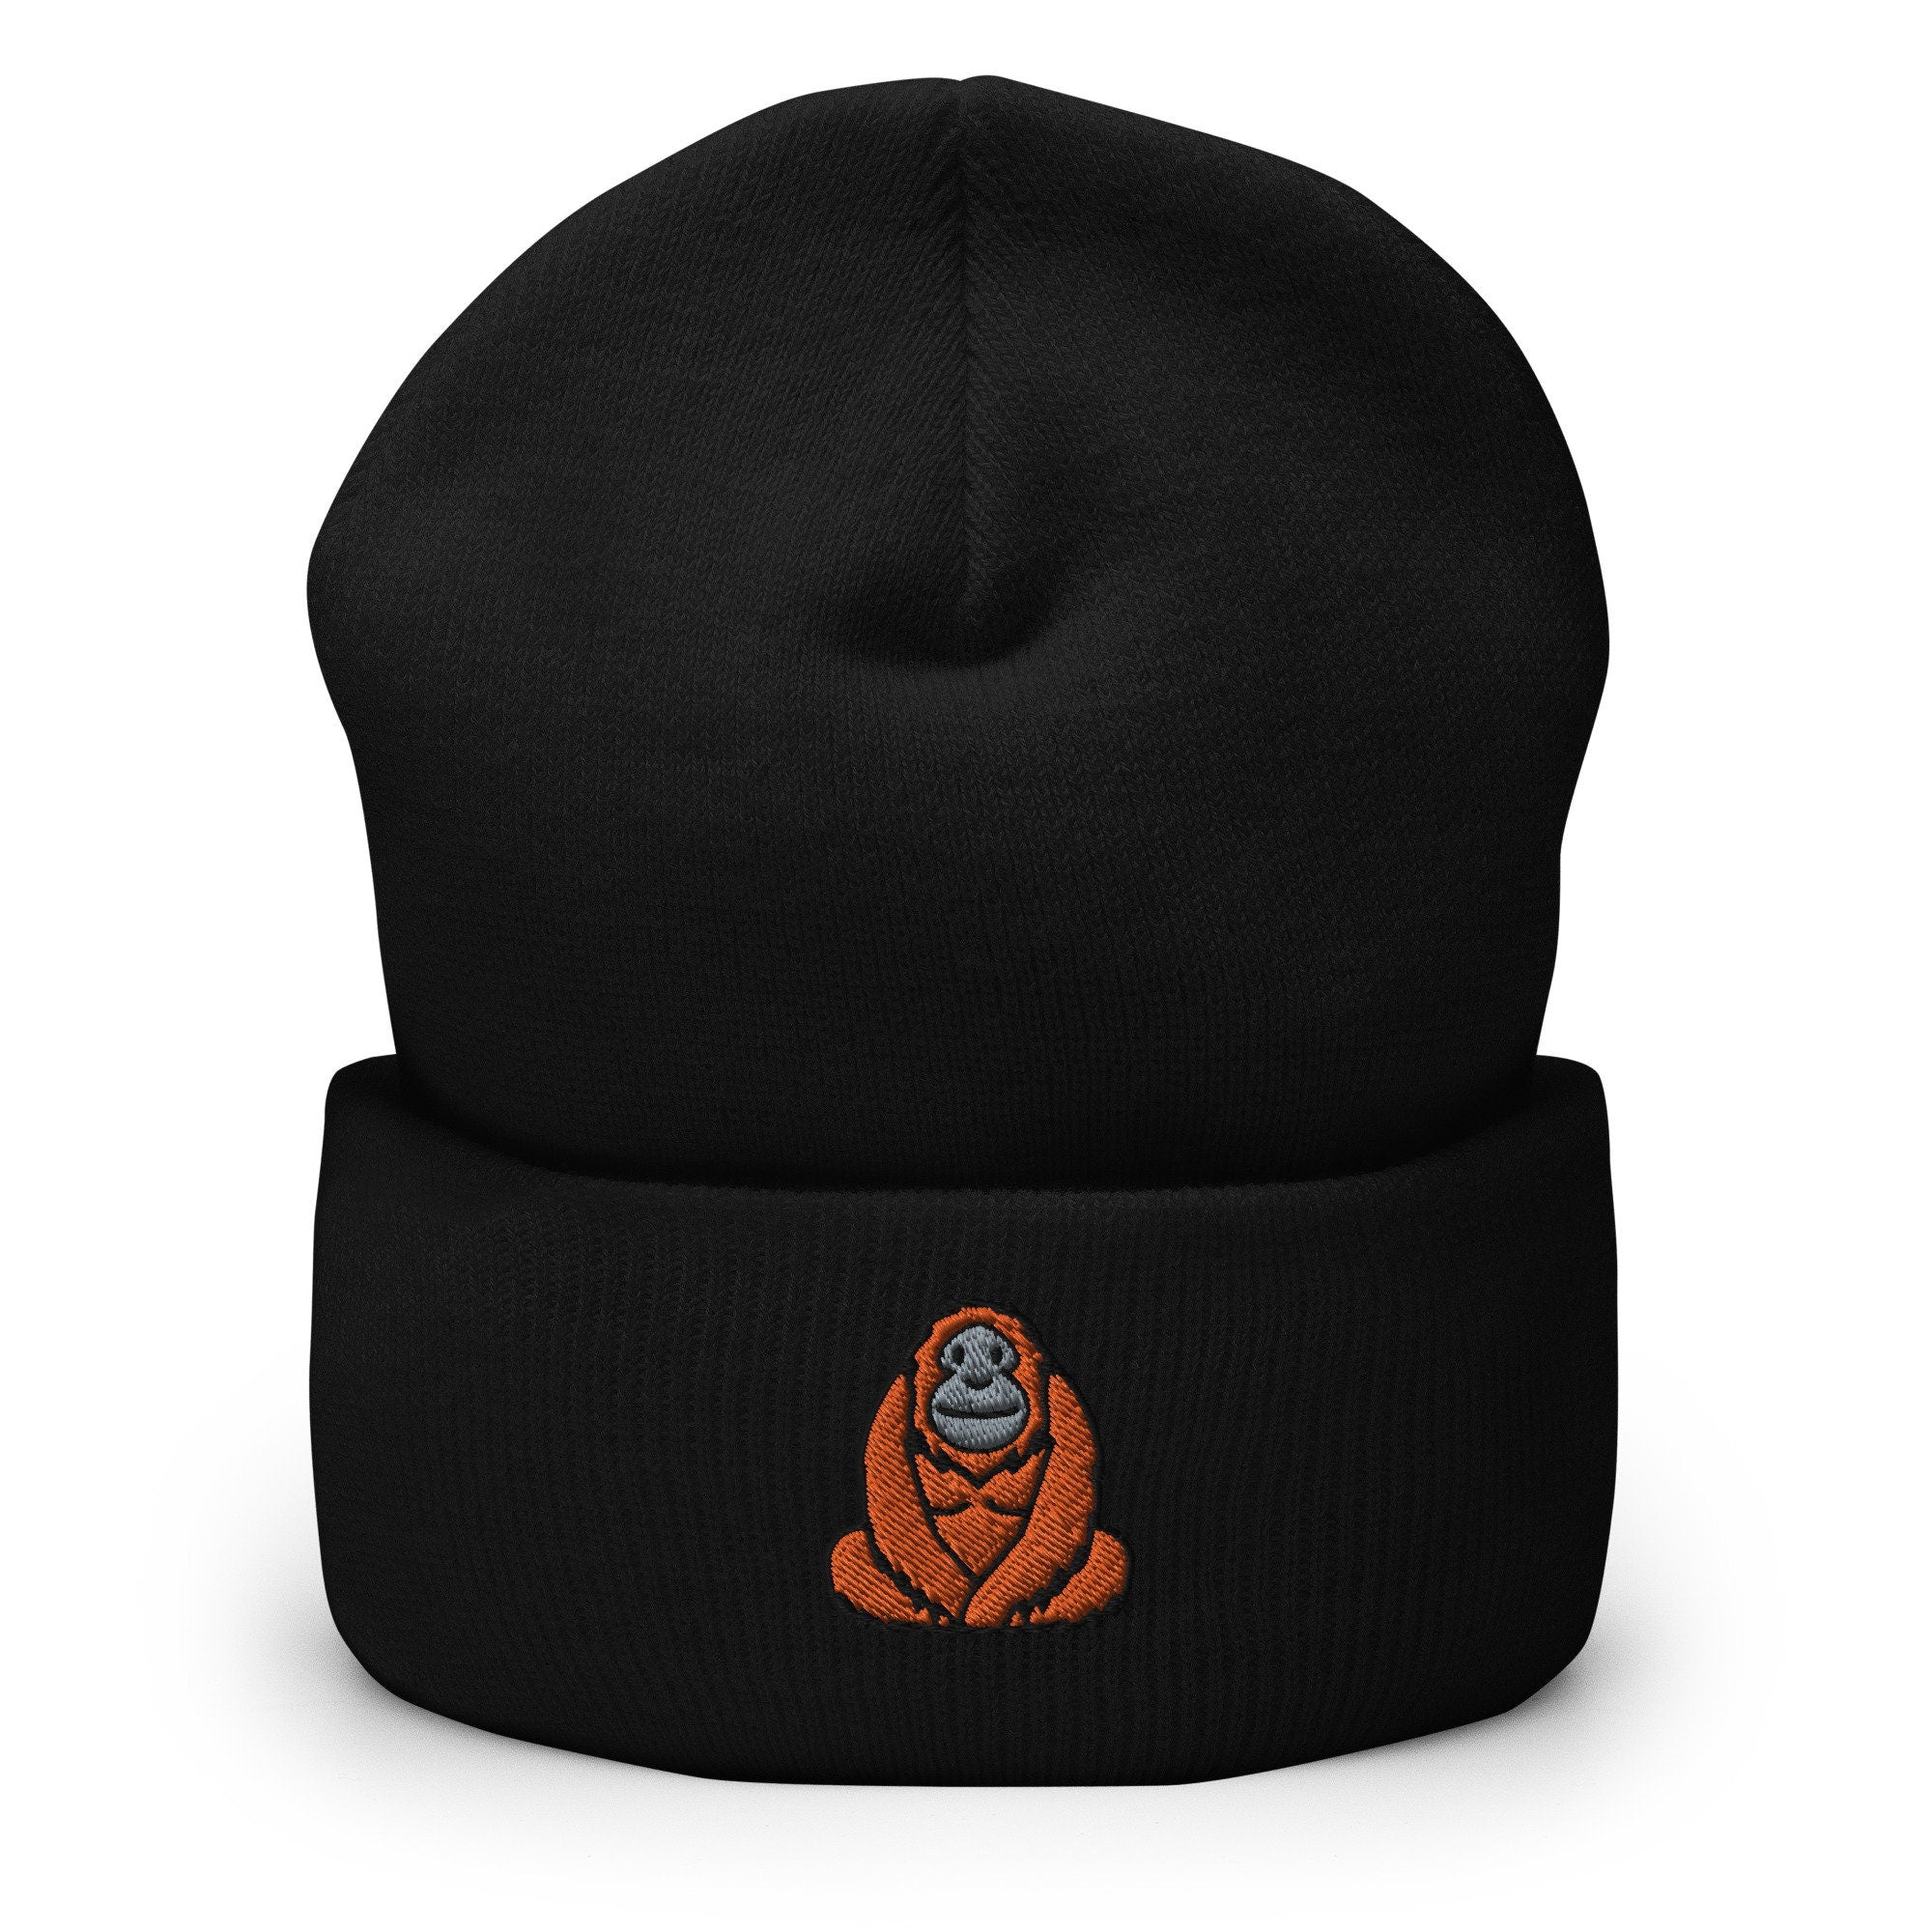 Orangutan Great Ape Embroidered Beanie, Handmade Cuffed Knit Unisex Slouchy Adult Winter Hat Cap Gift